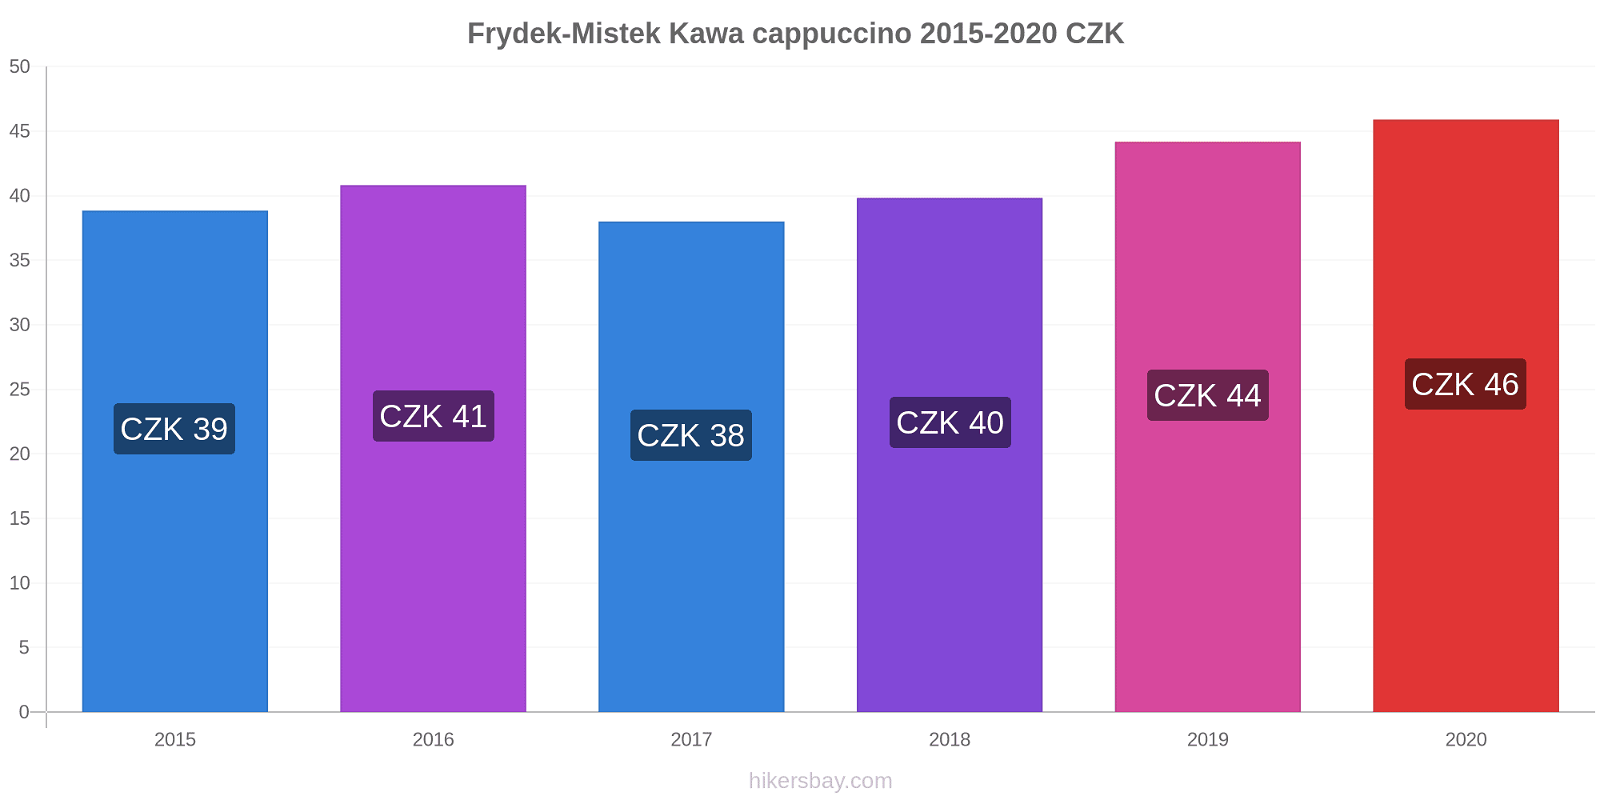 Frydek-Mistek zmiany cen Kawa cappuccino hikersbay.com